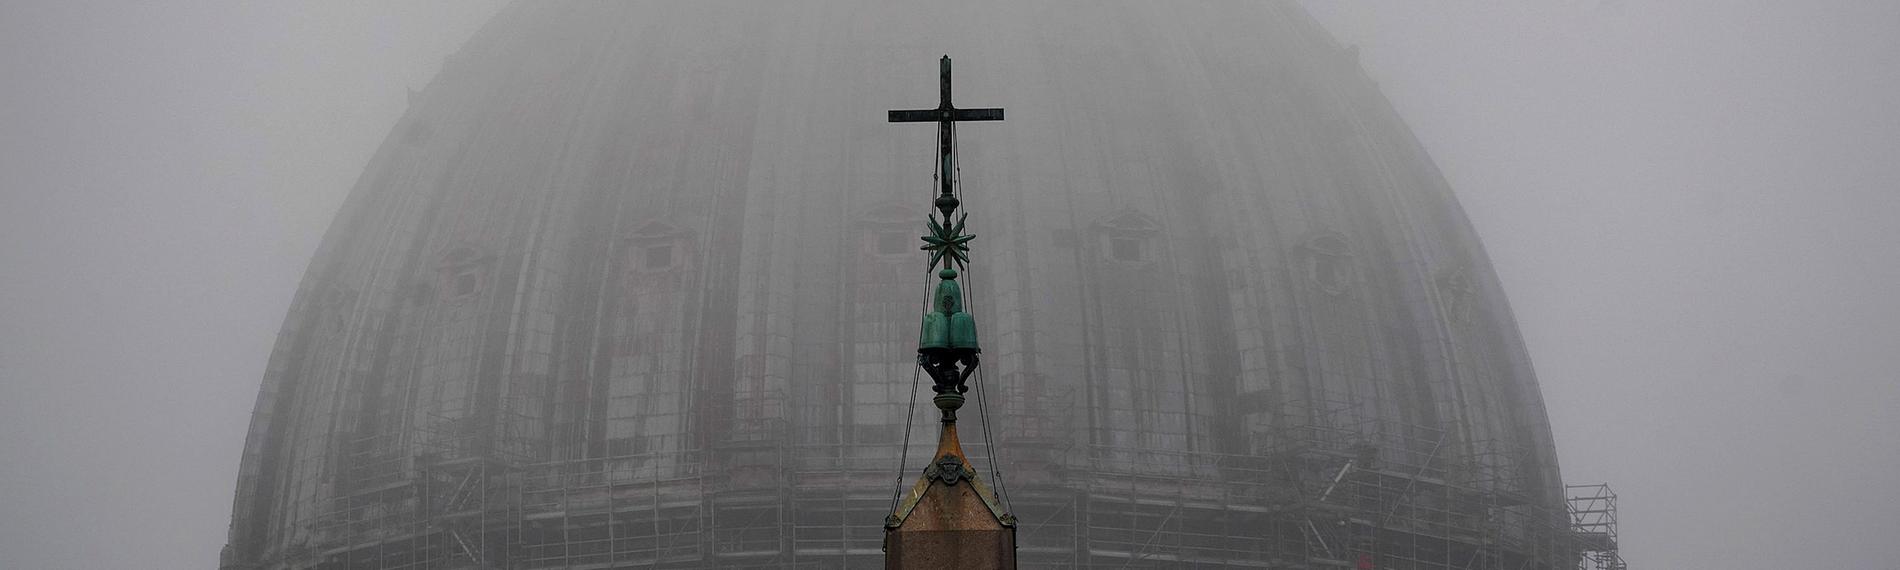 Nebelschwaden ziehen über die Kuppel des Petersdoms in Rom (Italien) aufgenommen am 19.02.2020